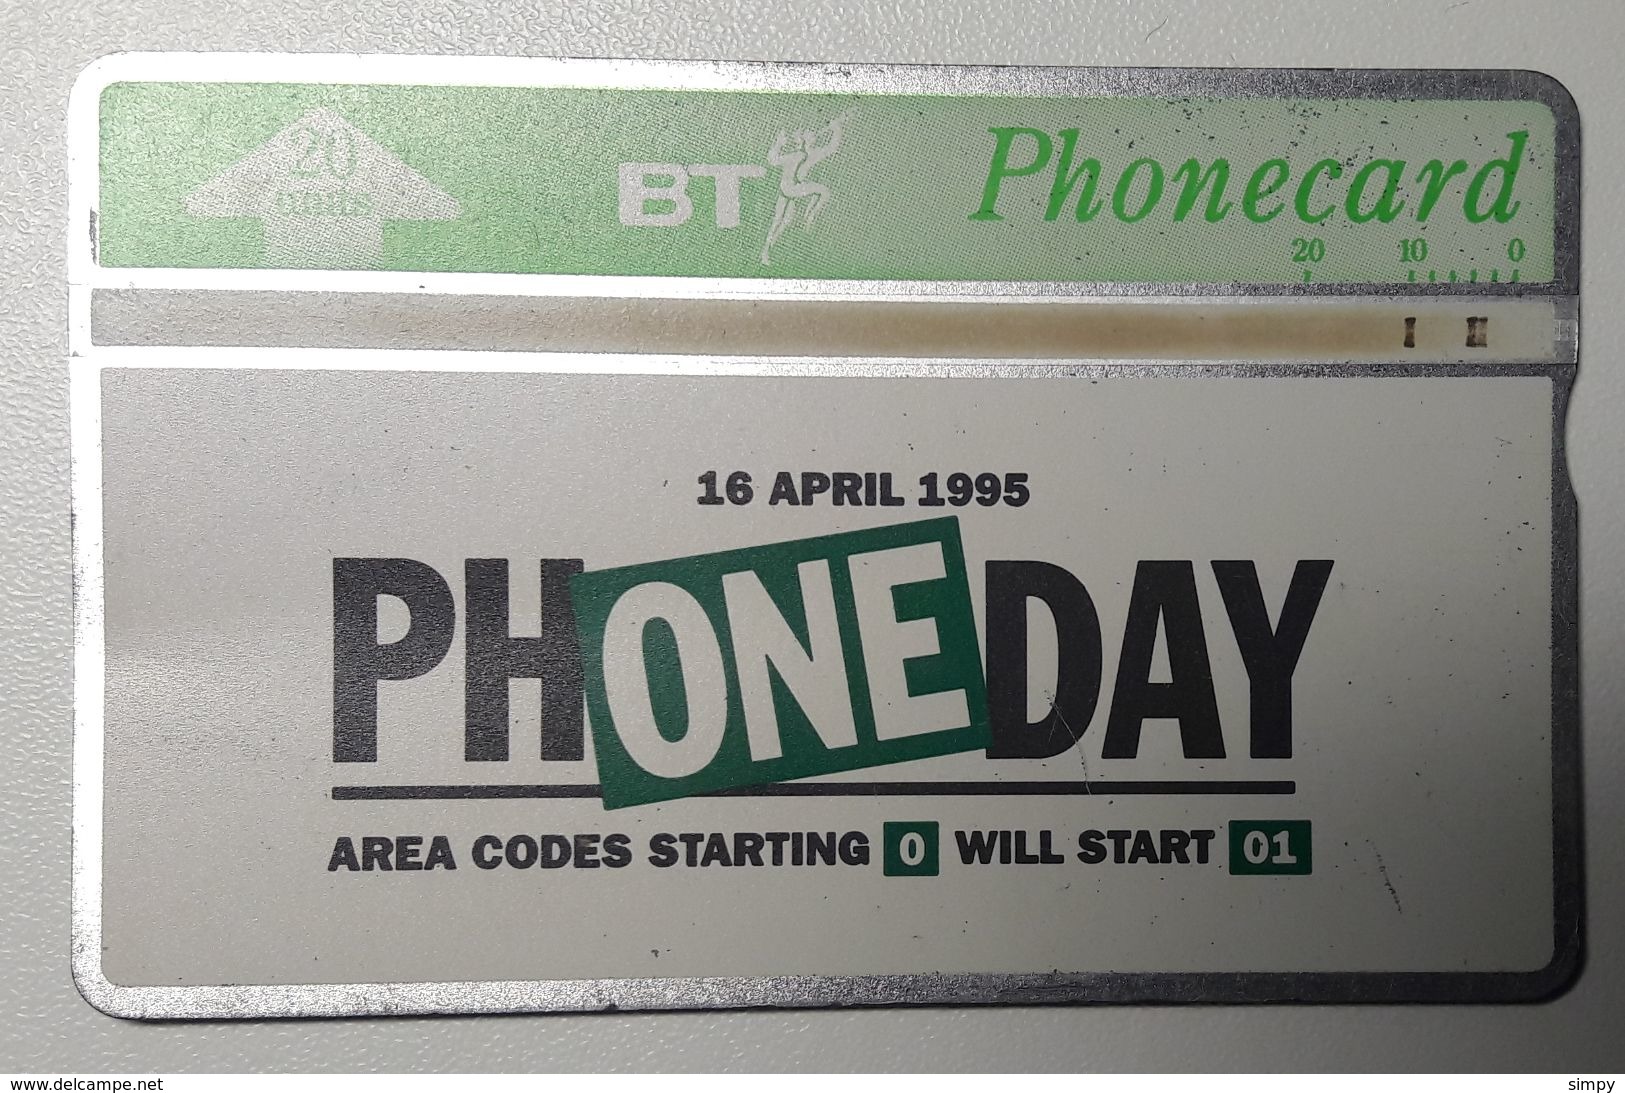 United Kingdom BT Phone Day 16.4.1995  Magnet Phone Card 20 Units - BT Global Cards (Prepaid)